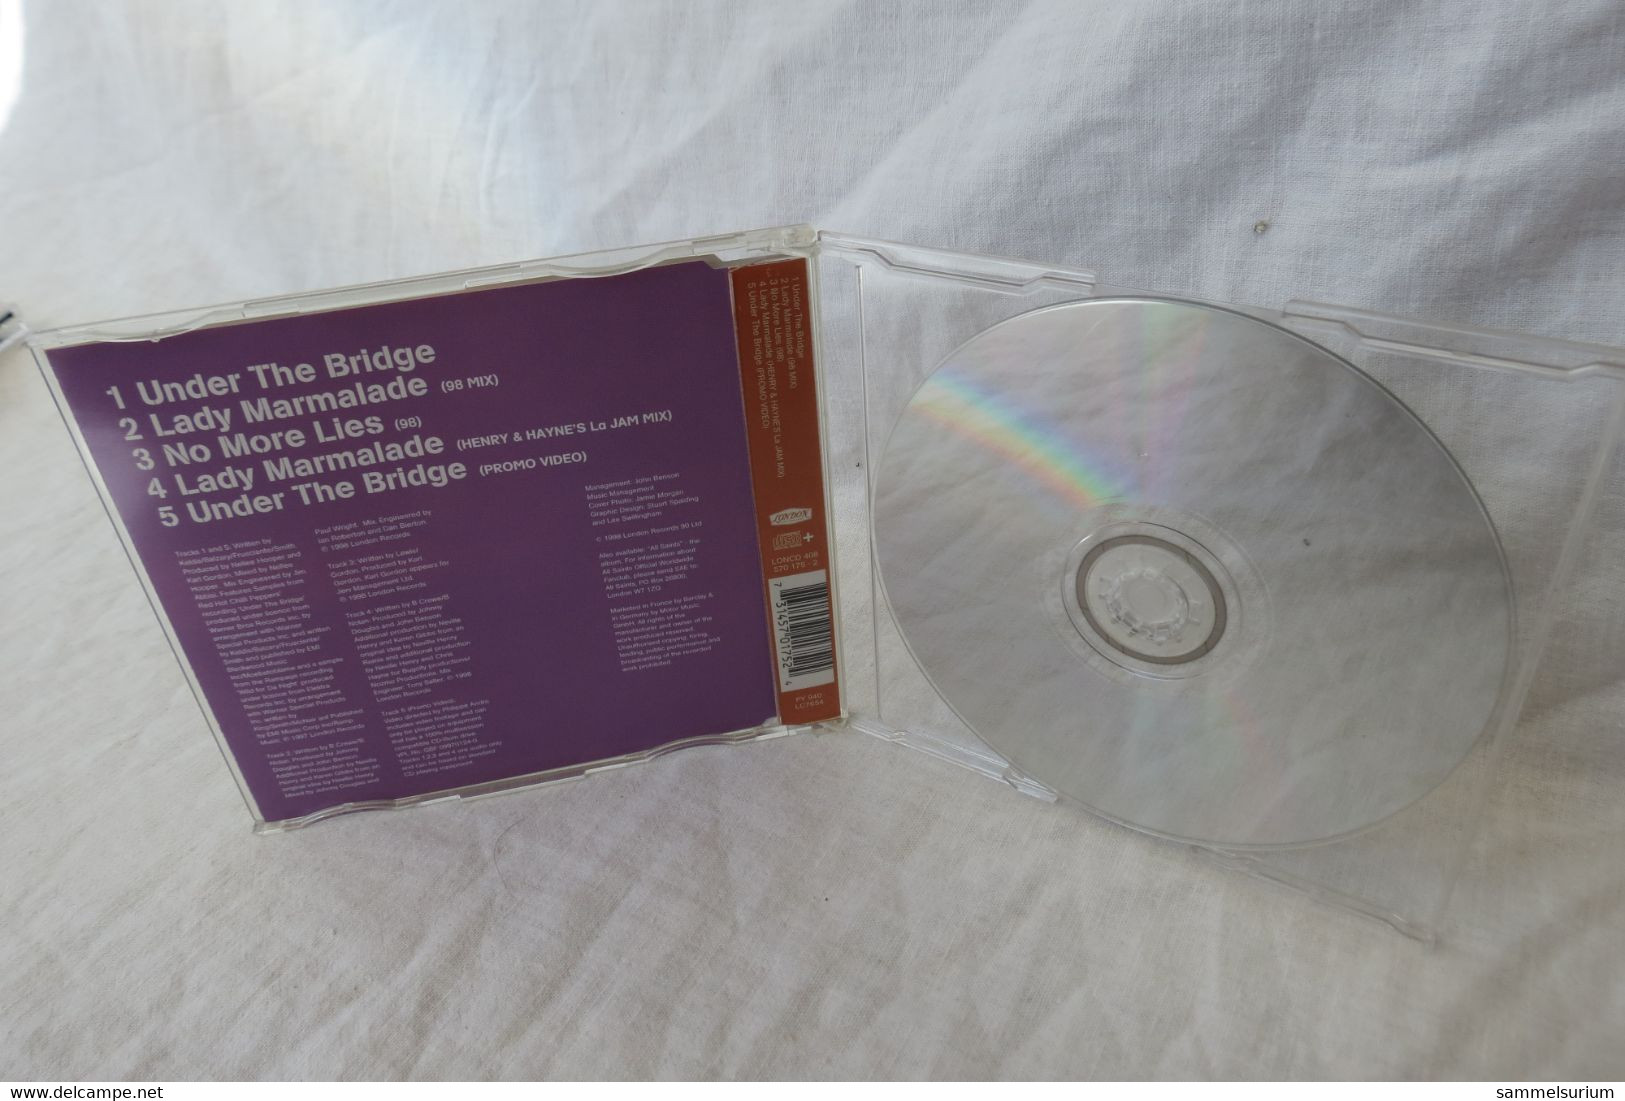 CD "All Saints" Under The Bridge / Lady Marmelade - Dance, Techno & House